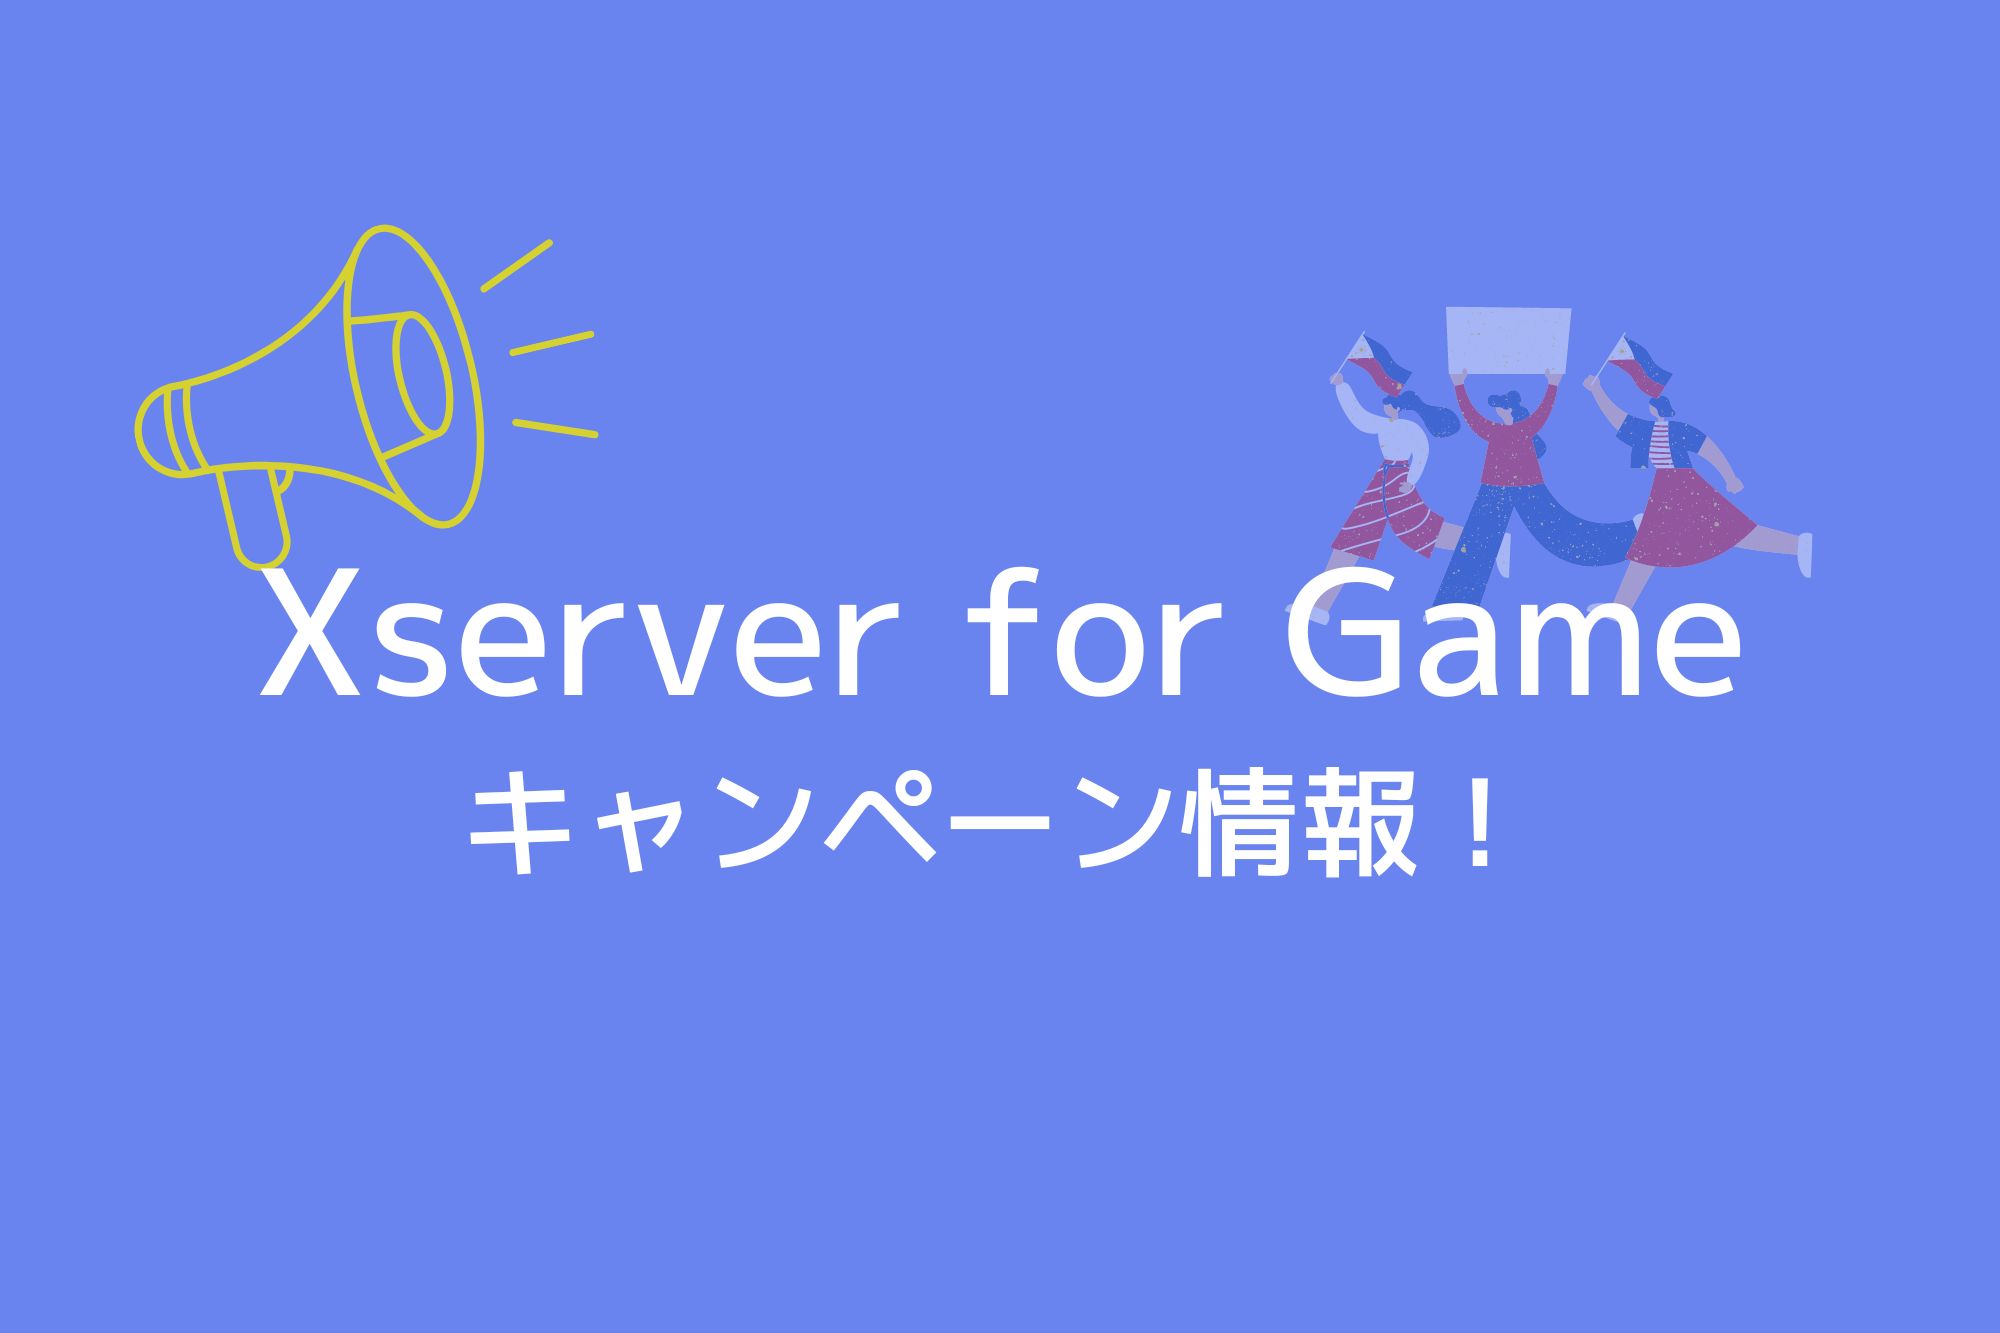 Xserver VPS for Gameのキャンペーン情報